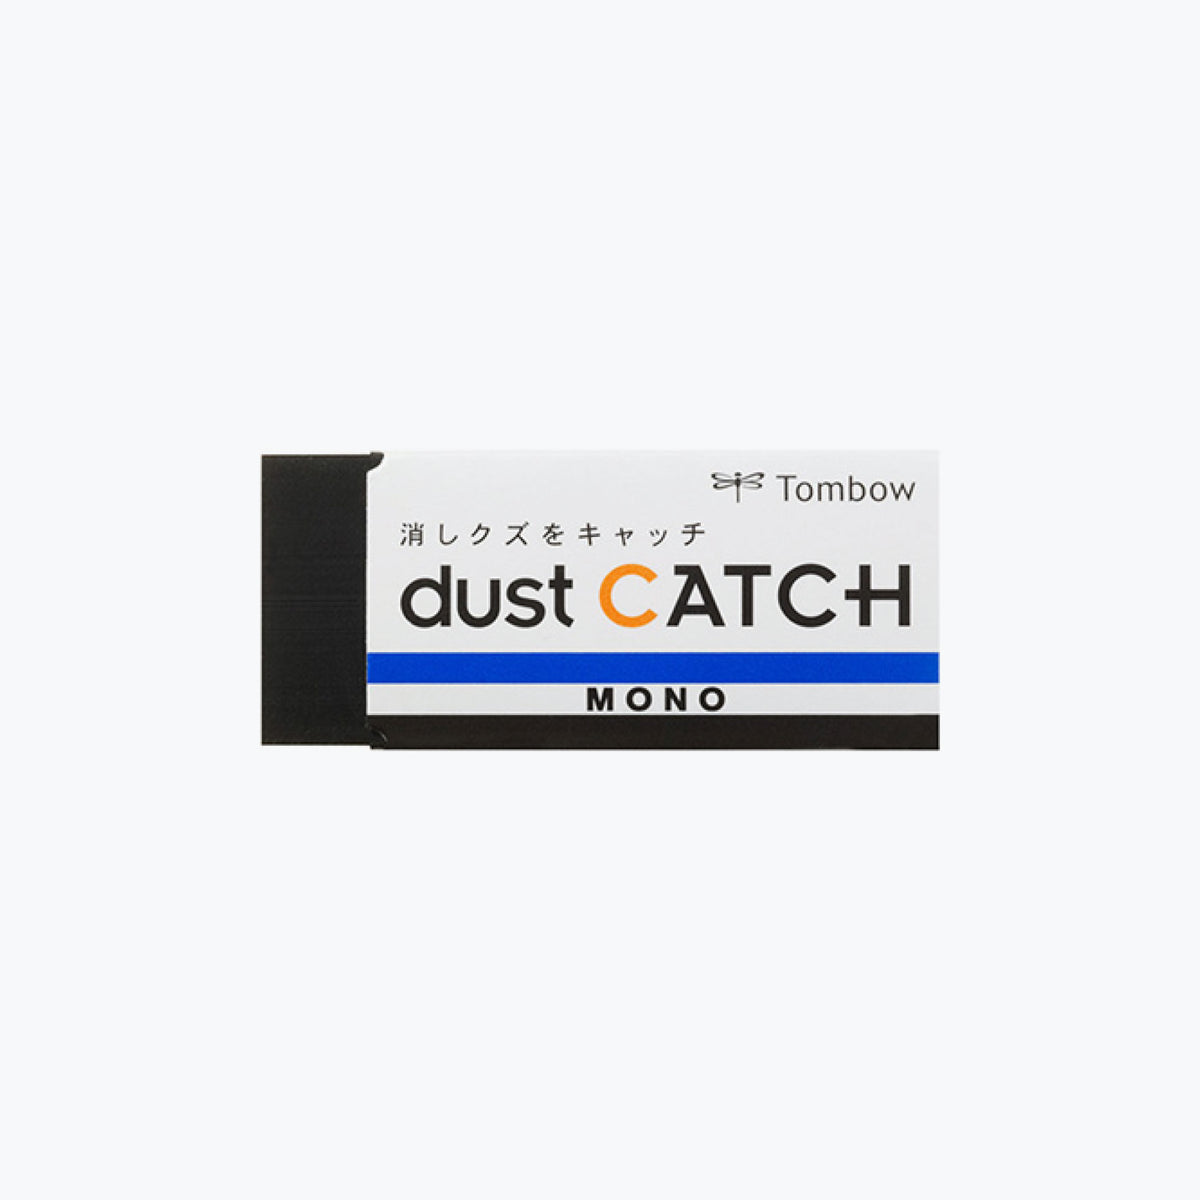 Tombow - Eraser - Mono - Dust Catch